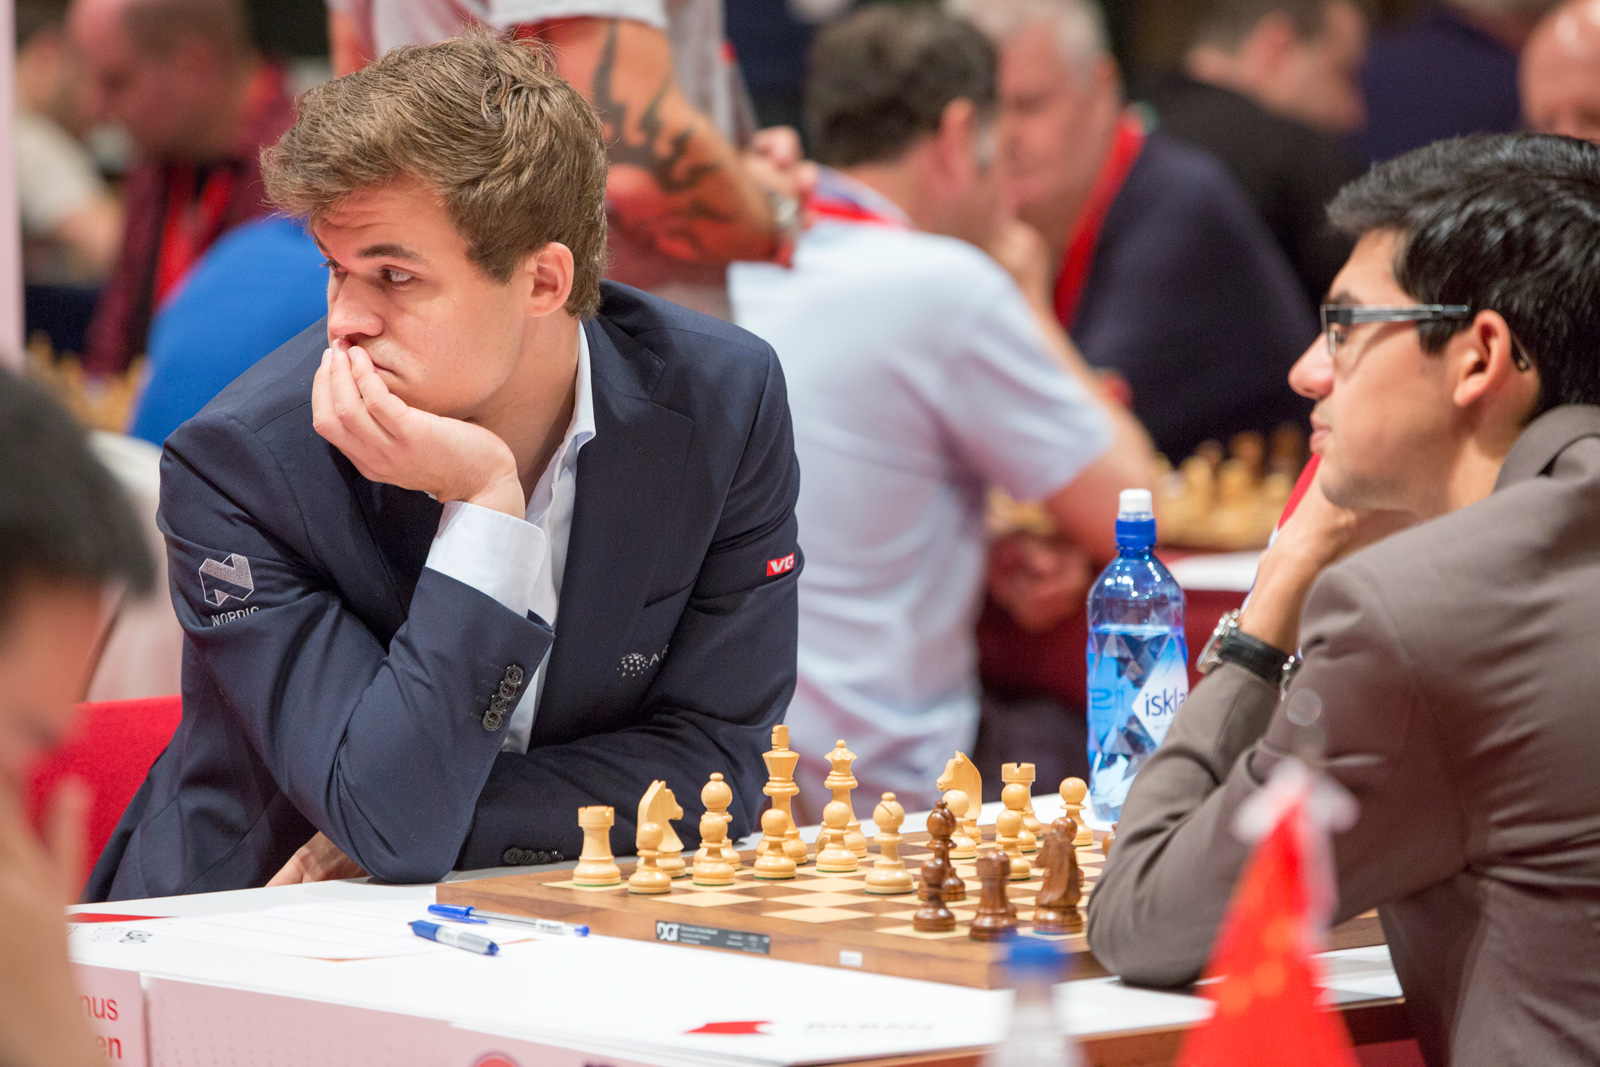 Judit Polgar, the chess prodigy who beat men at their own game